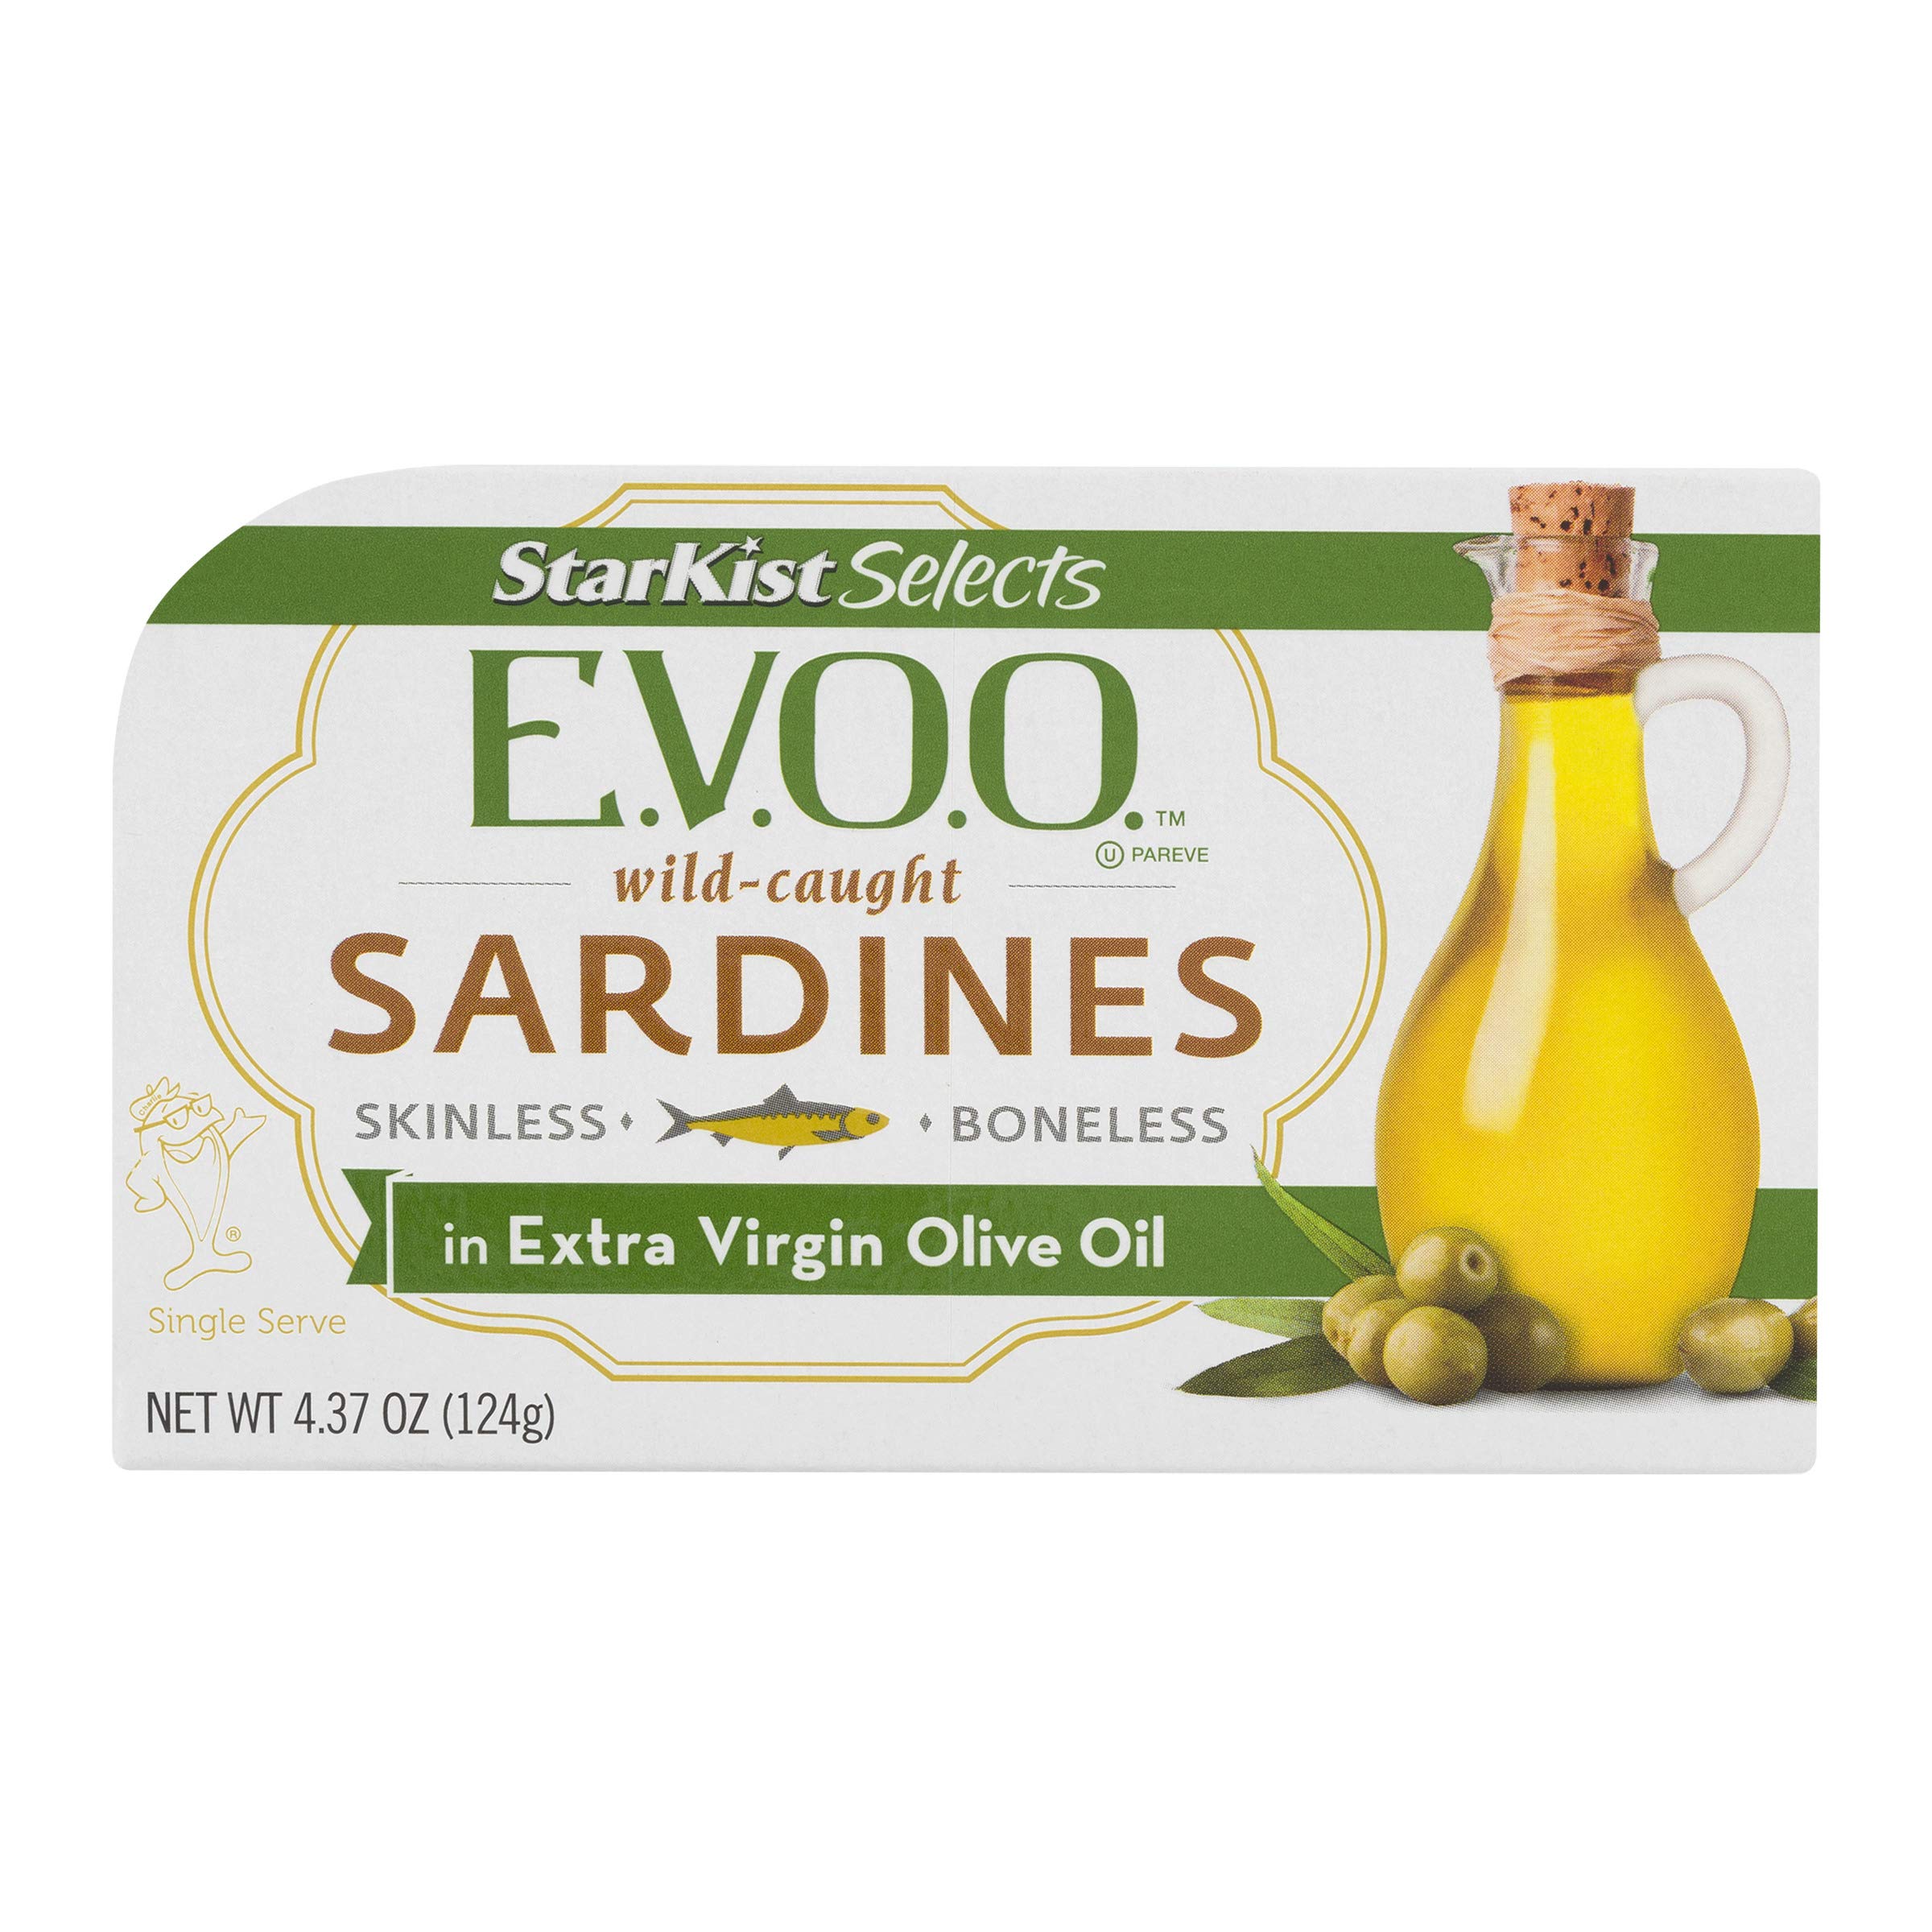 Sardines in Extra Virgin Olive Oil, Skinless & Boneless